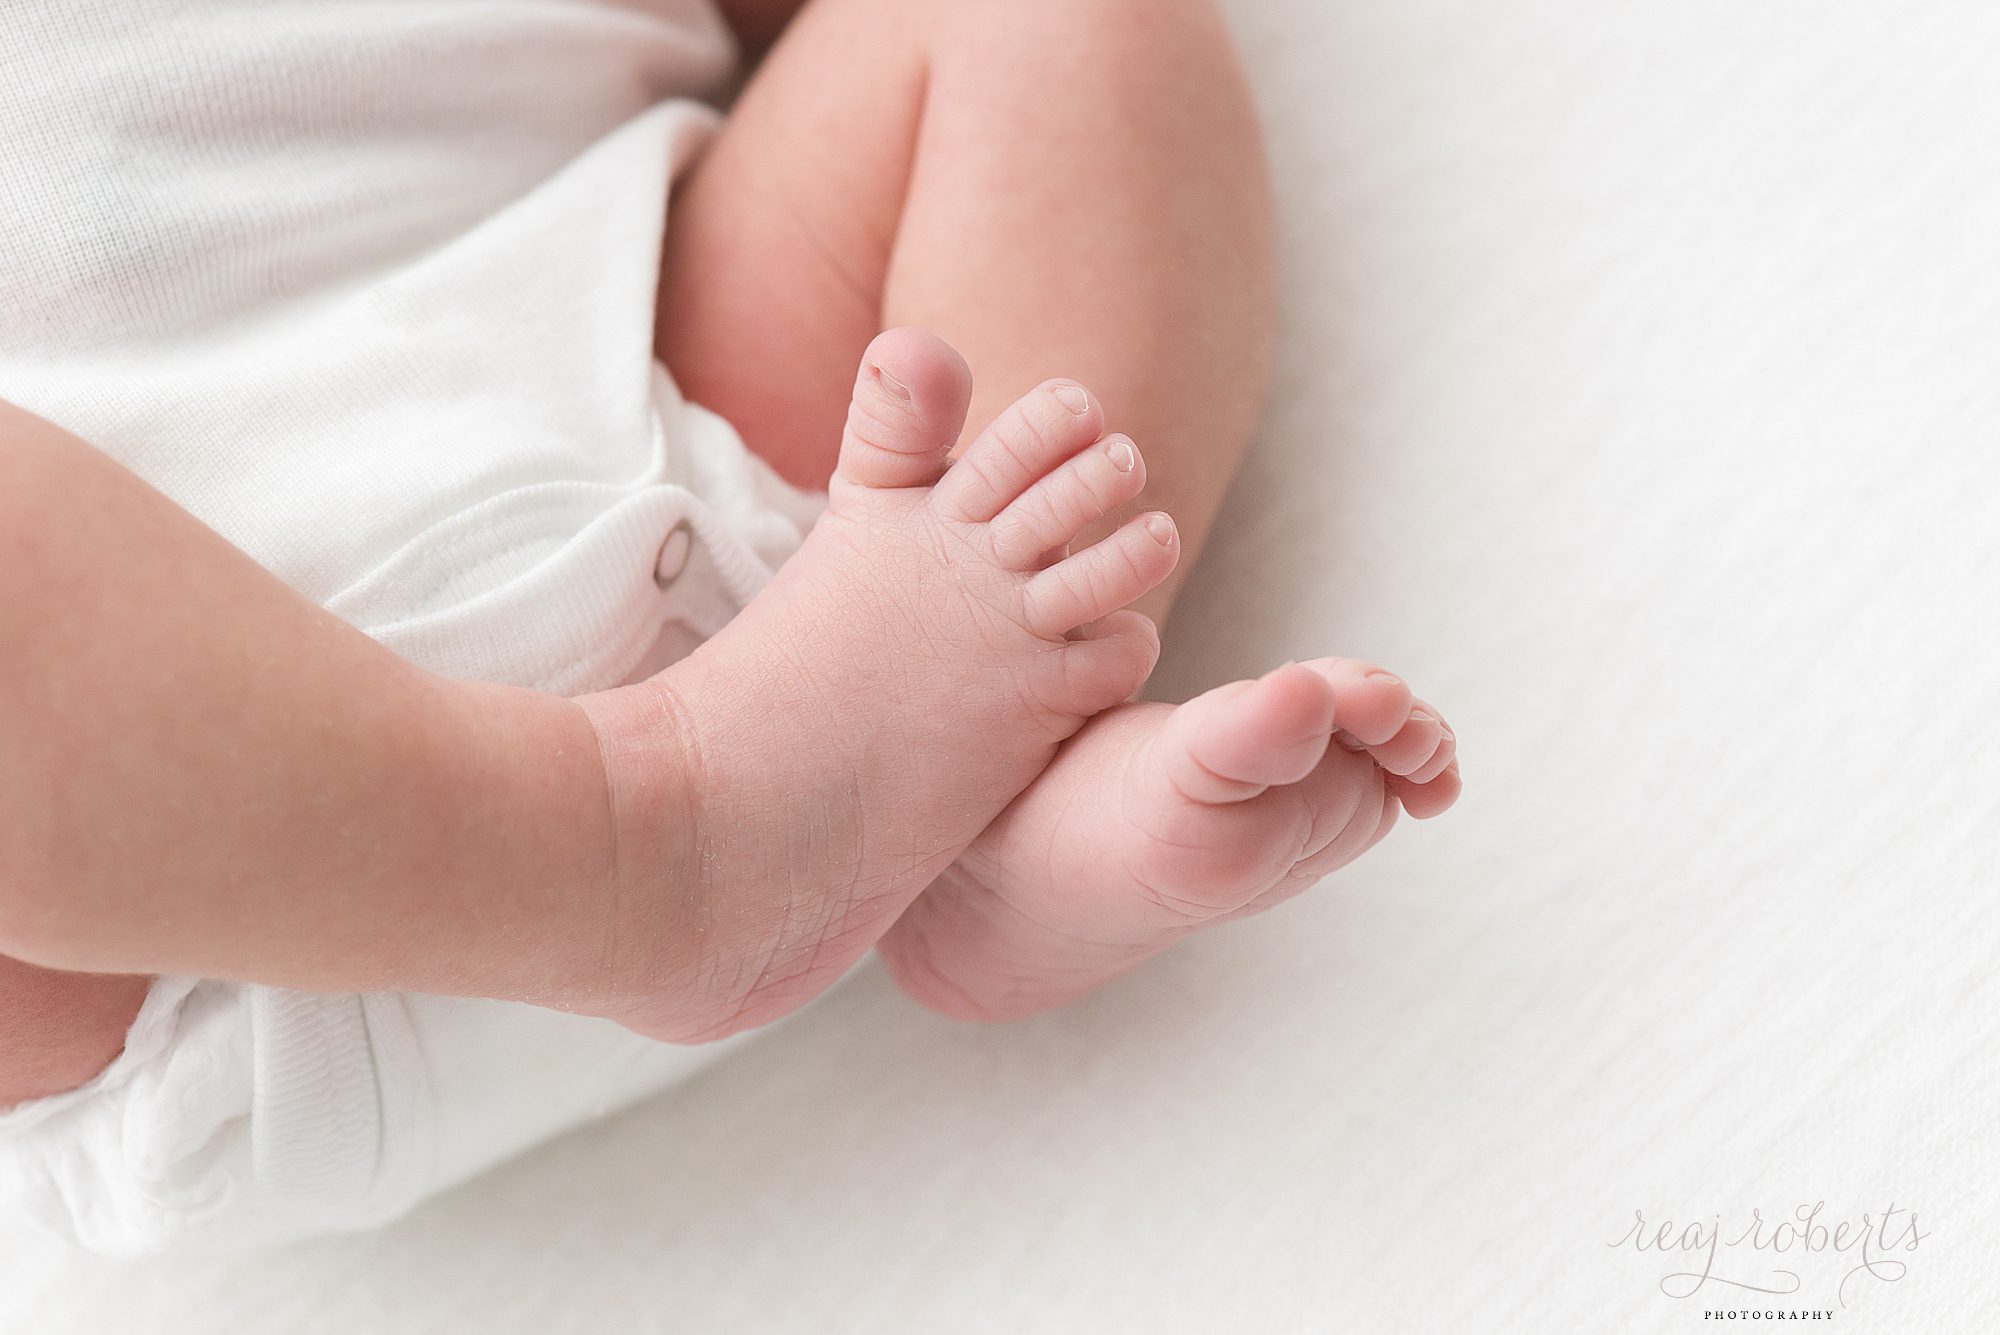 newborn baby feet macro images | Reaj Roberts Photography